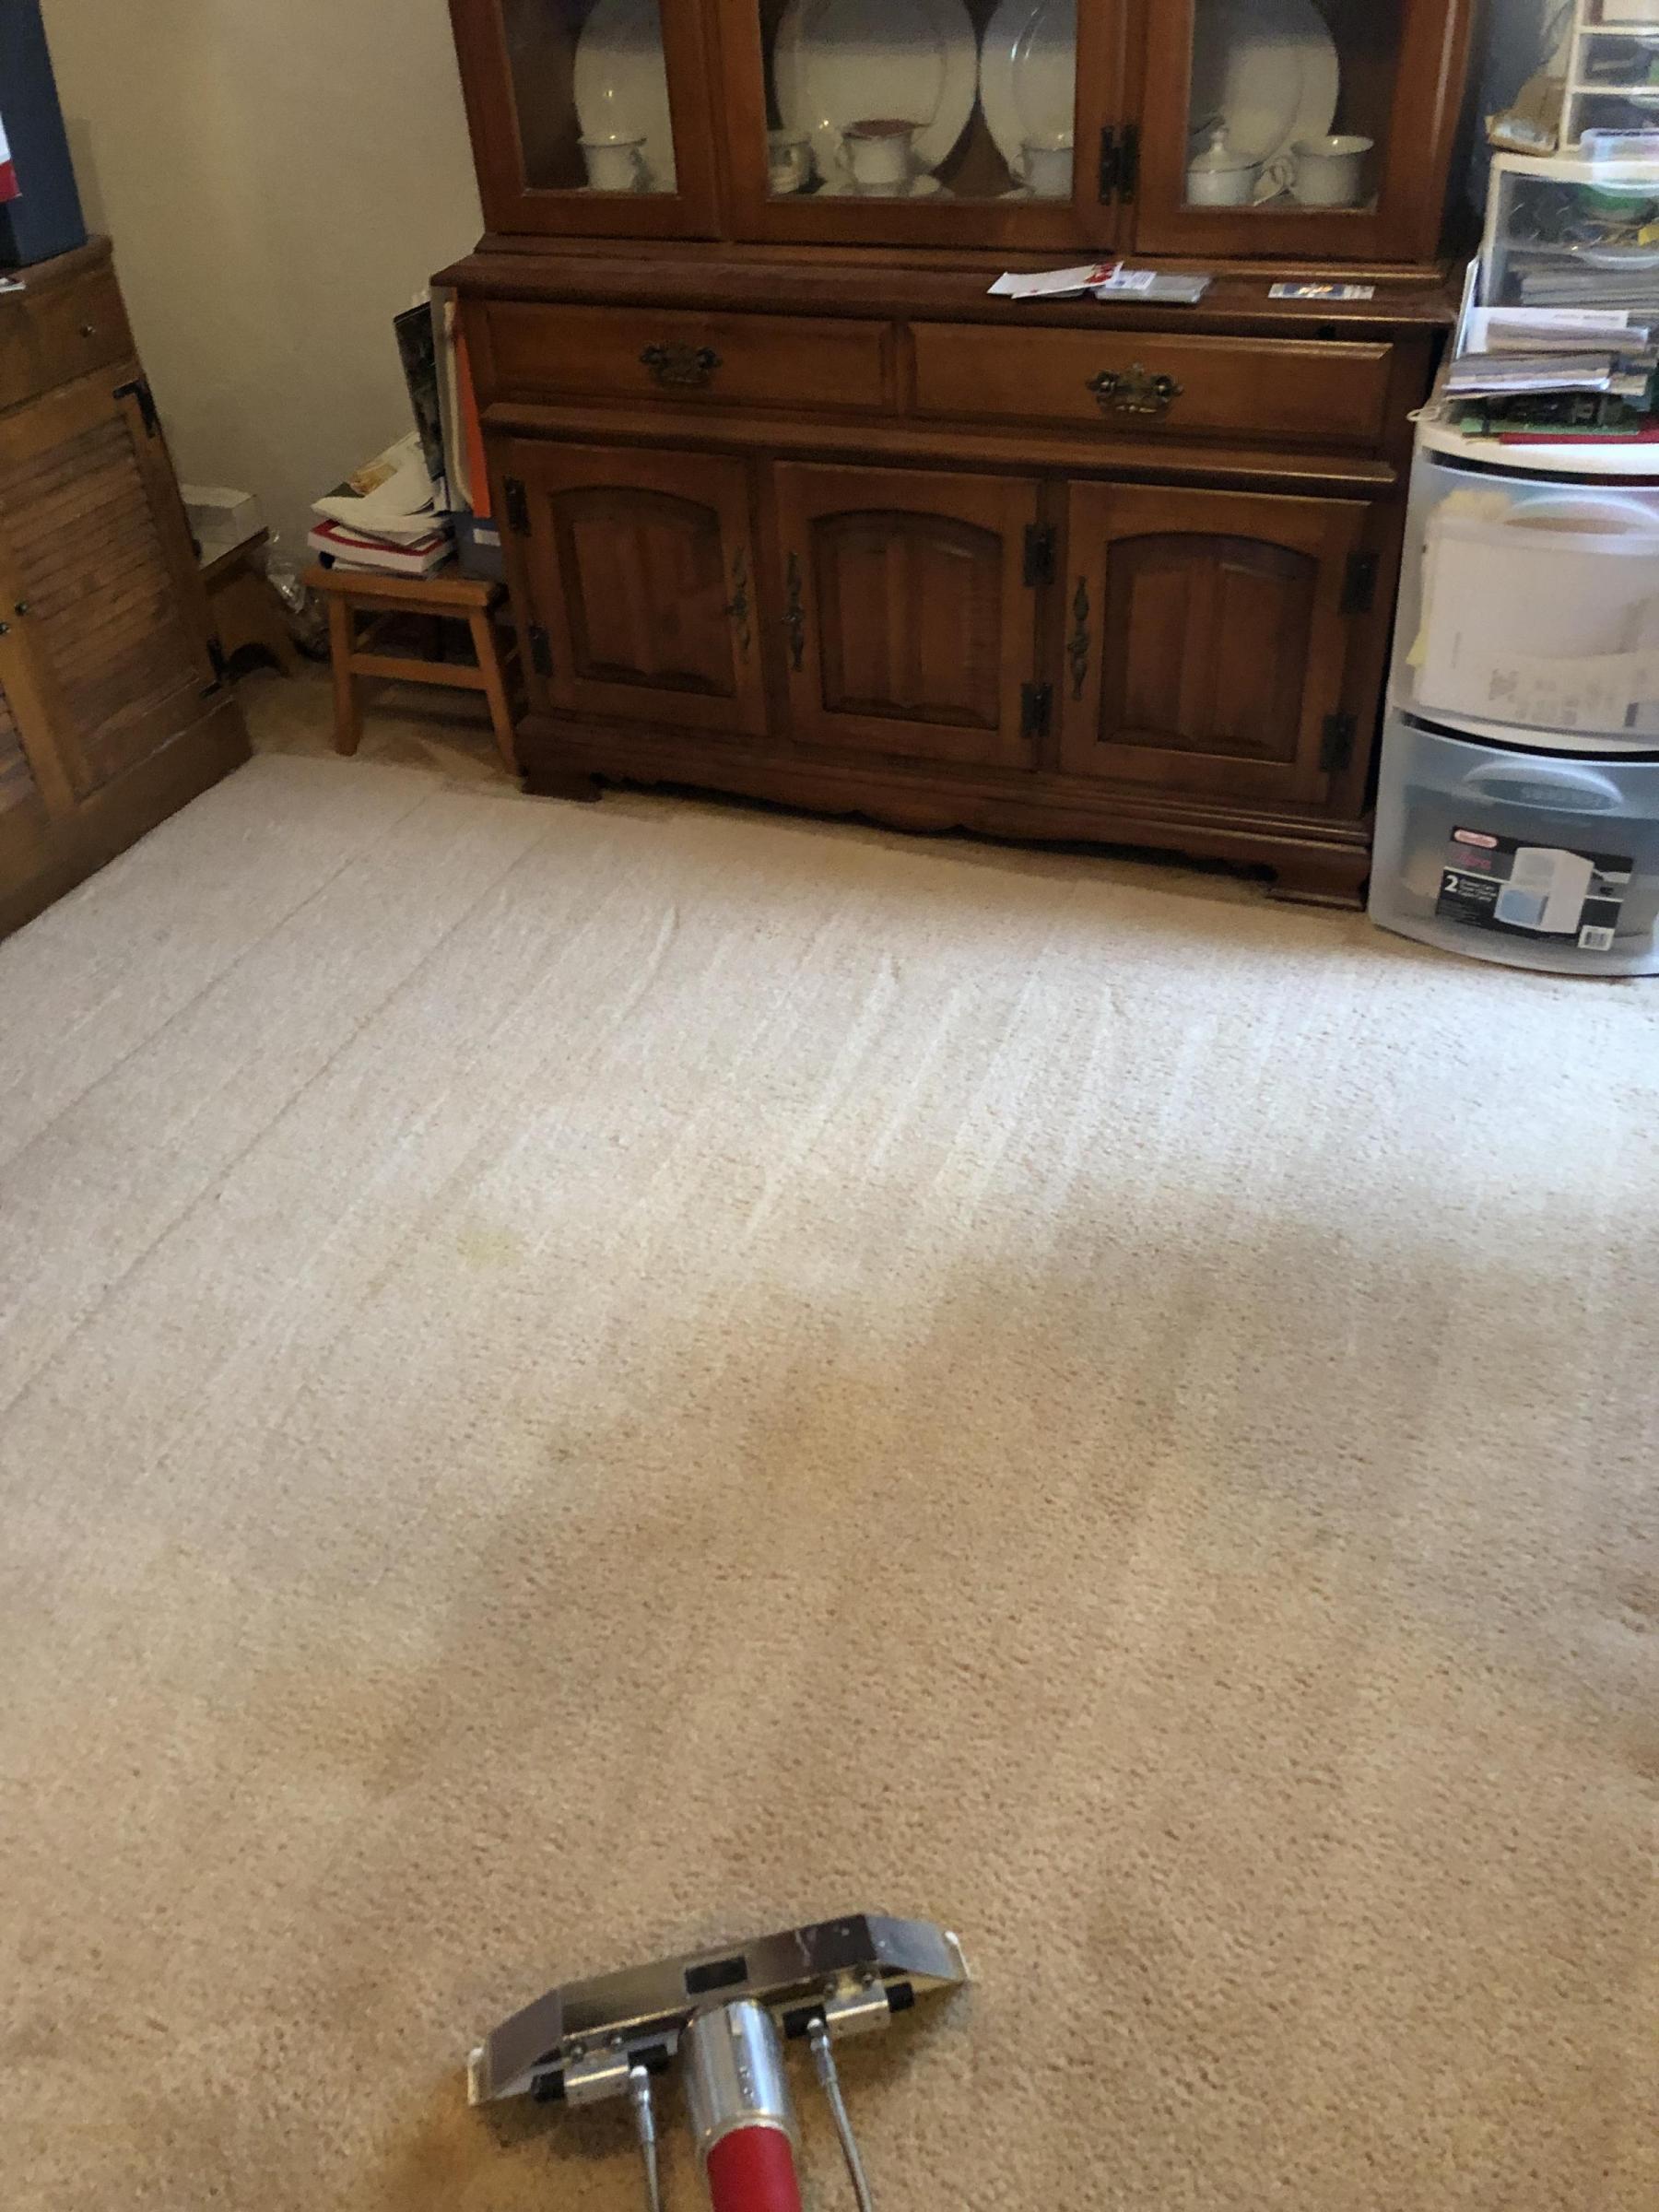 Prescott Professional Carpet Cleaning Will Help